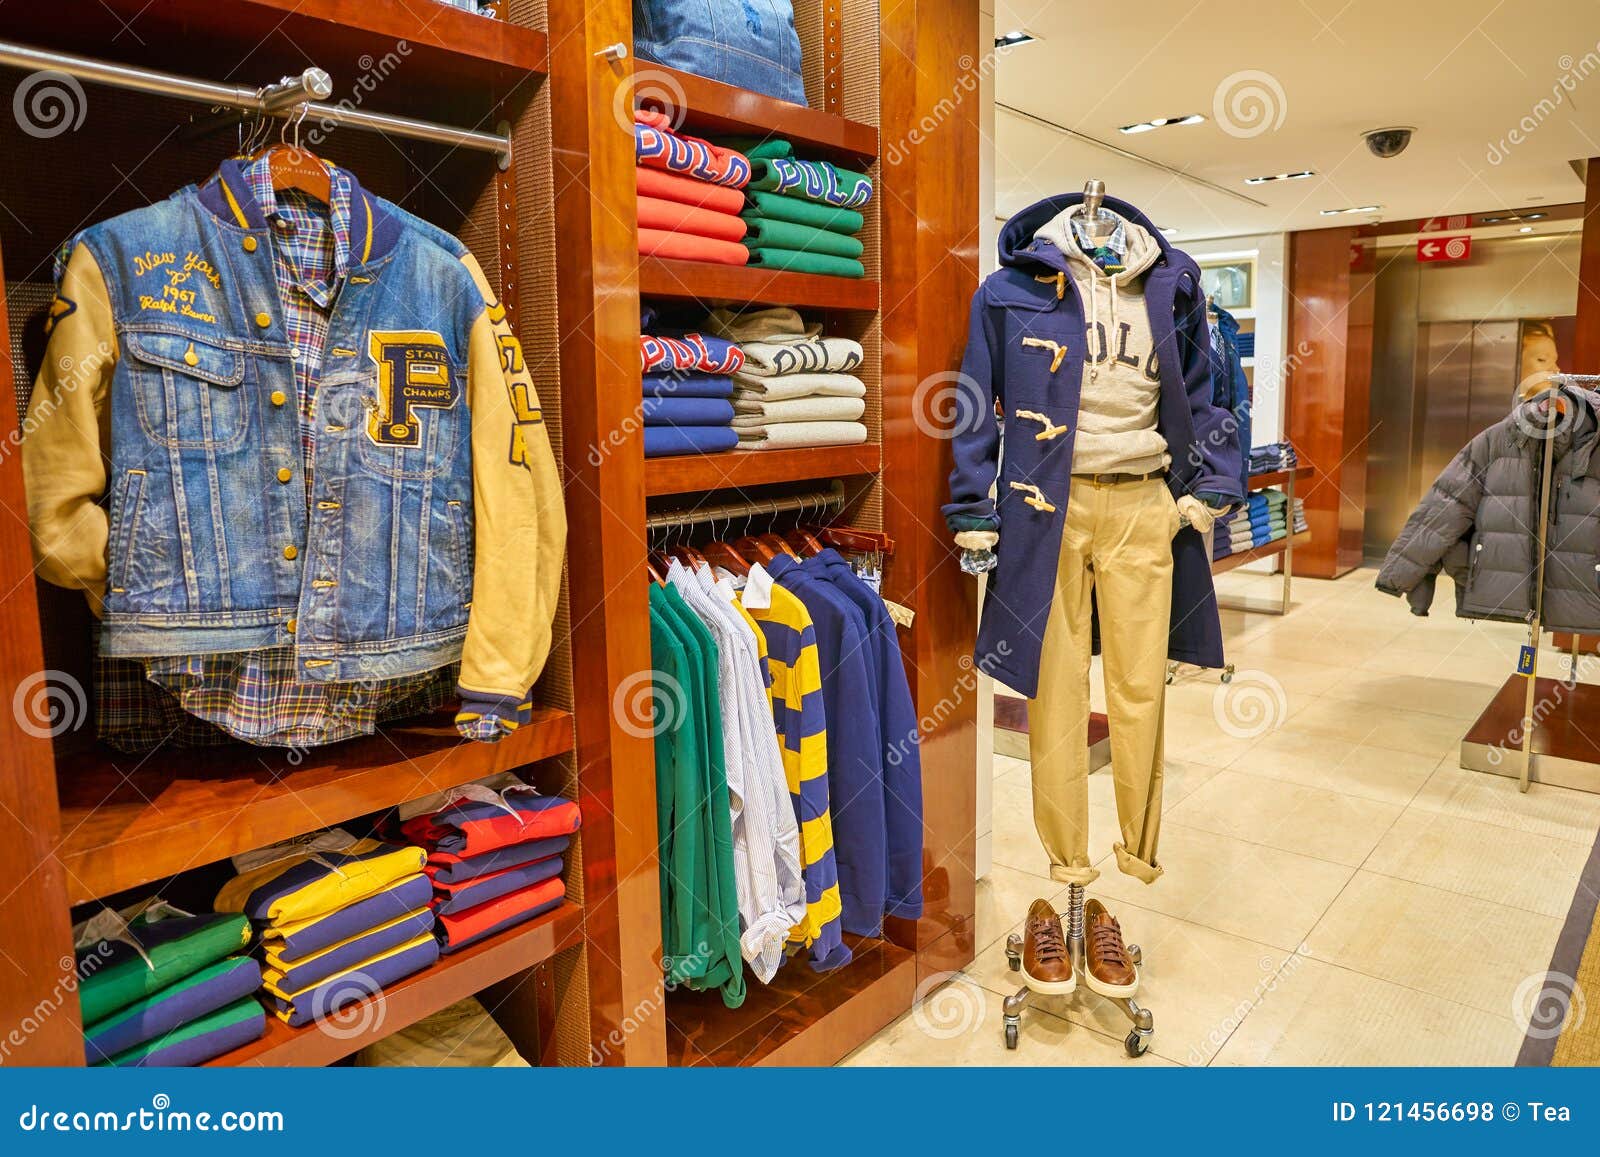 Photo of Ralph Lauren clothing store